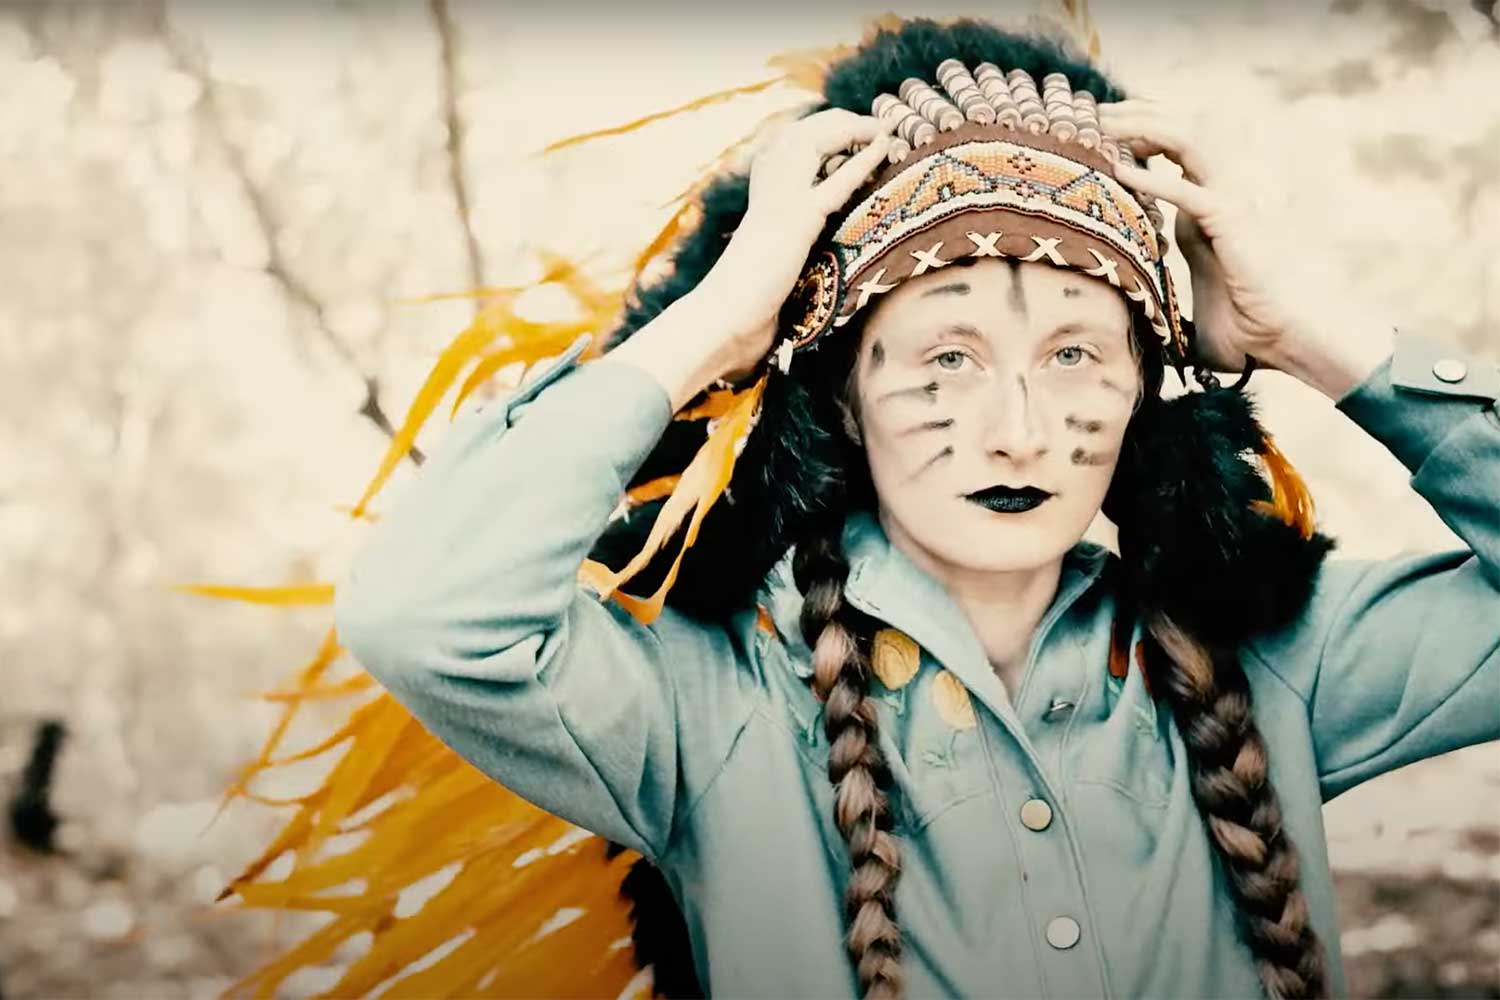 Cherokee warrior bride from Nino Brown's Jailhouse Ramble video